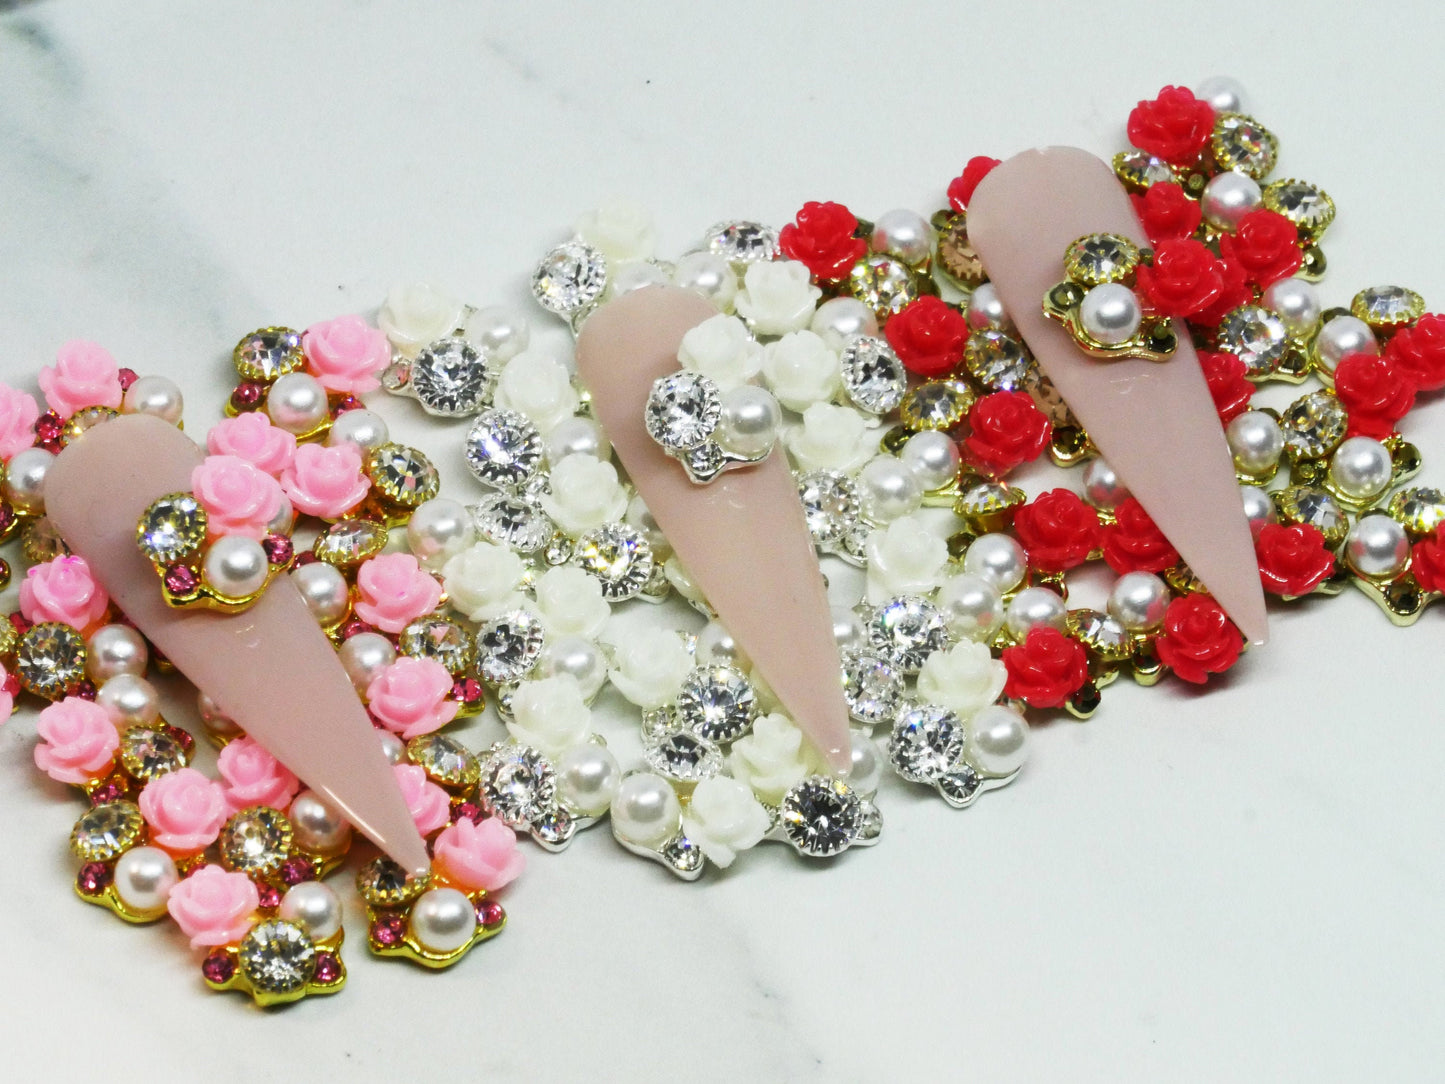 4 pcs Rose flower Nail Jewelry /floral nail art charm 